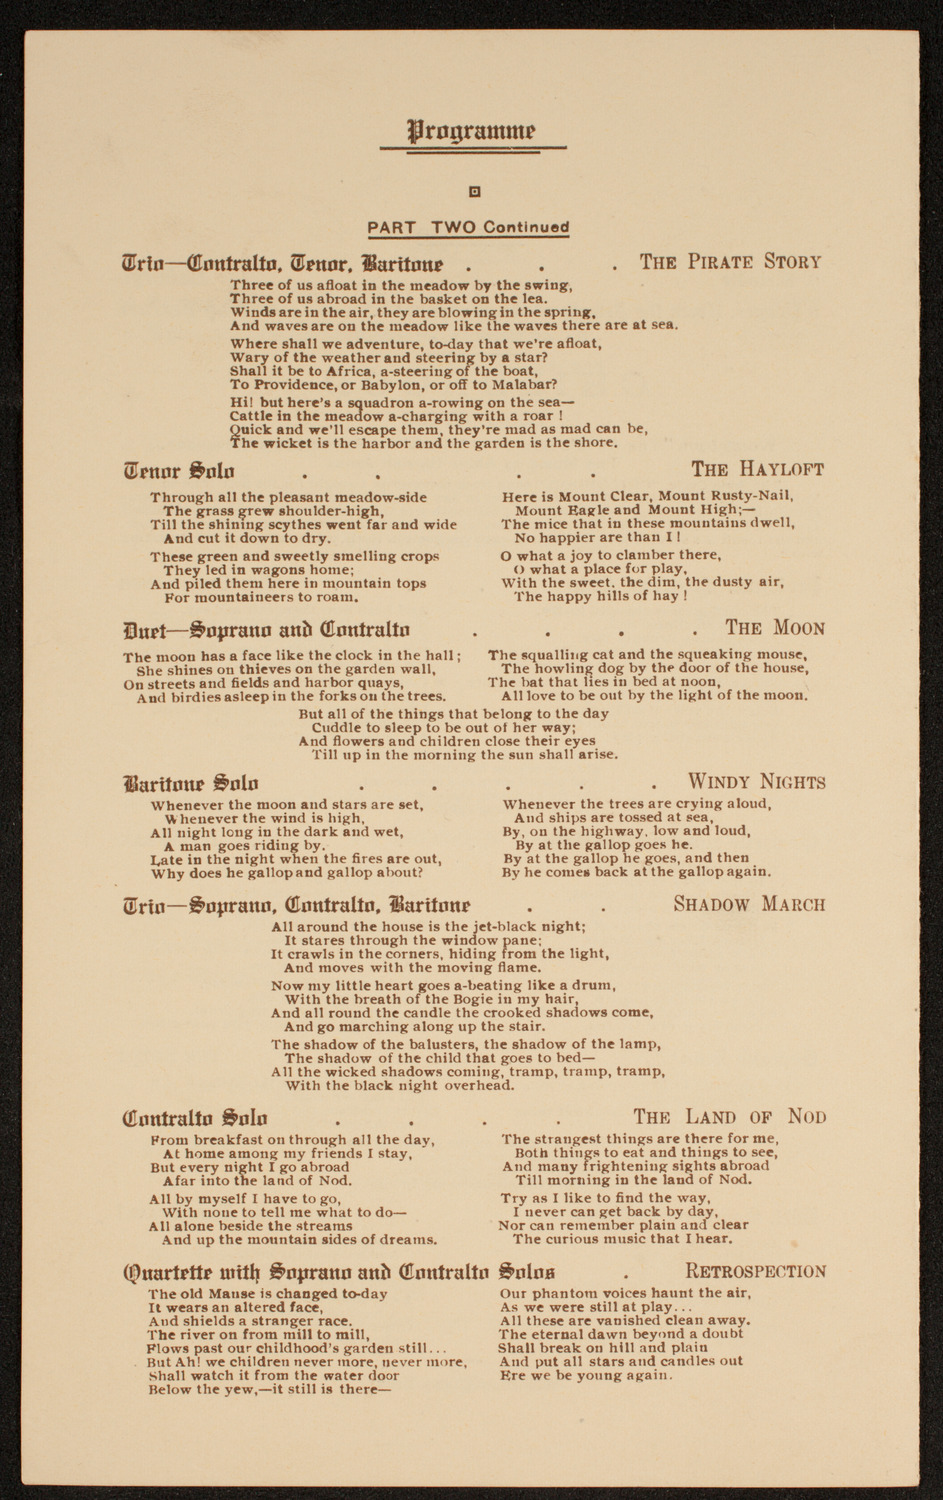 The Century Quartette, November 17, 1915, program page 4